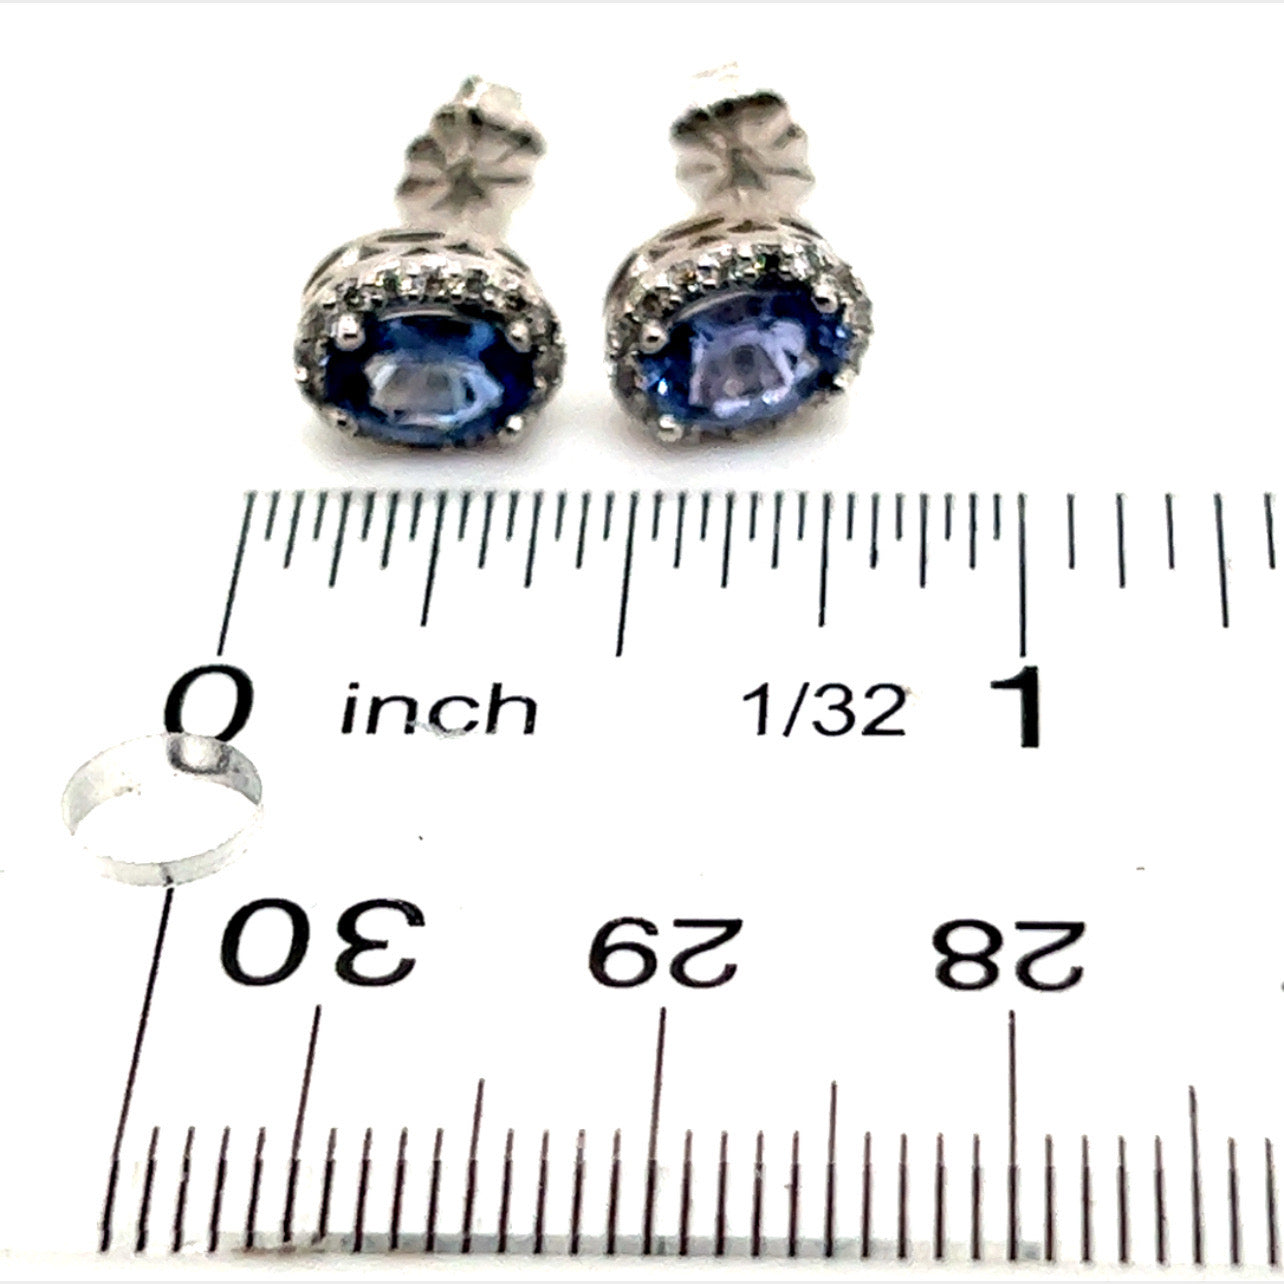 Natural Sapphire Diamond Earrings 14k Gold 1.73 TCW Certified $3,950 121272 - Certified Estate Jewelry